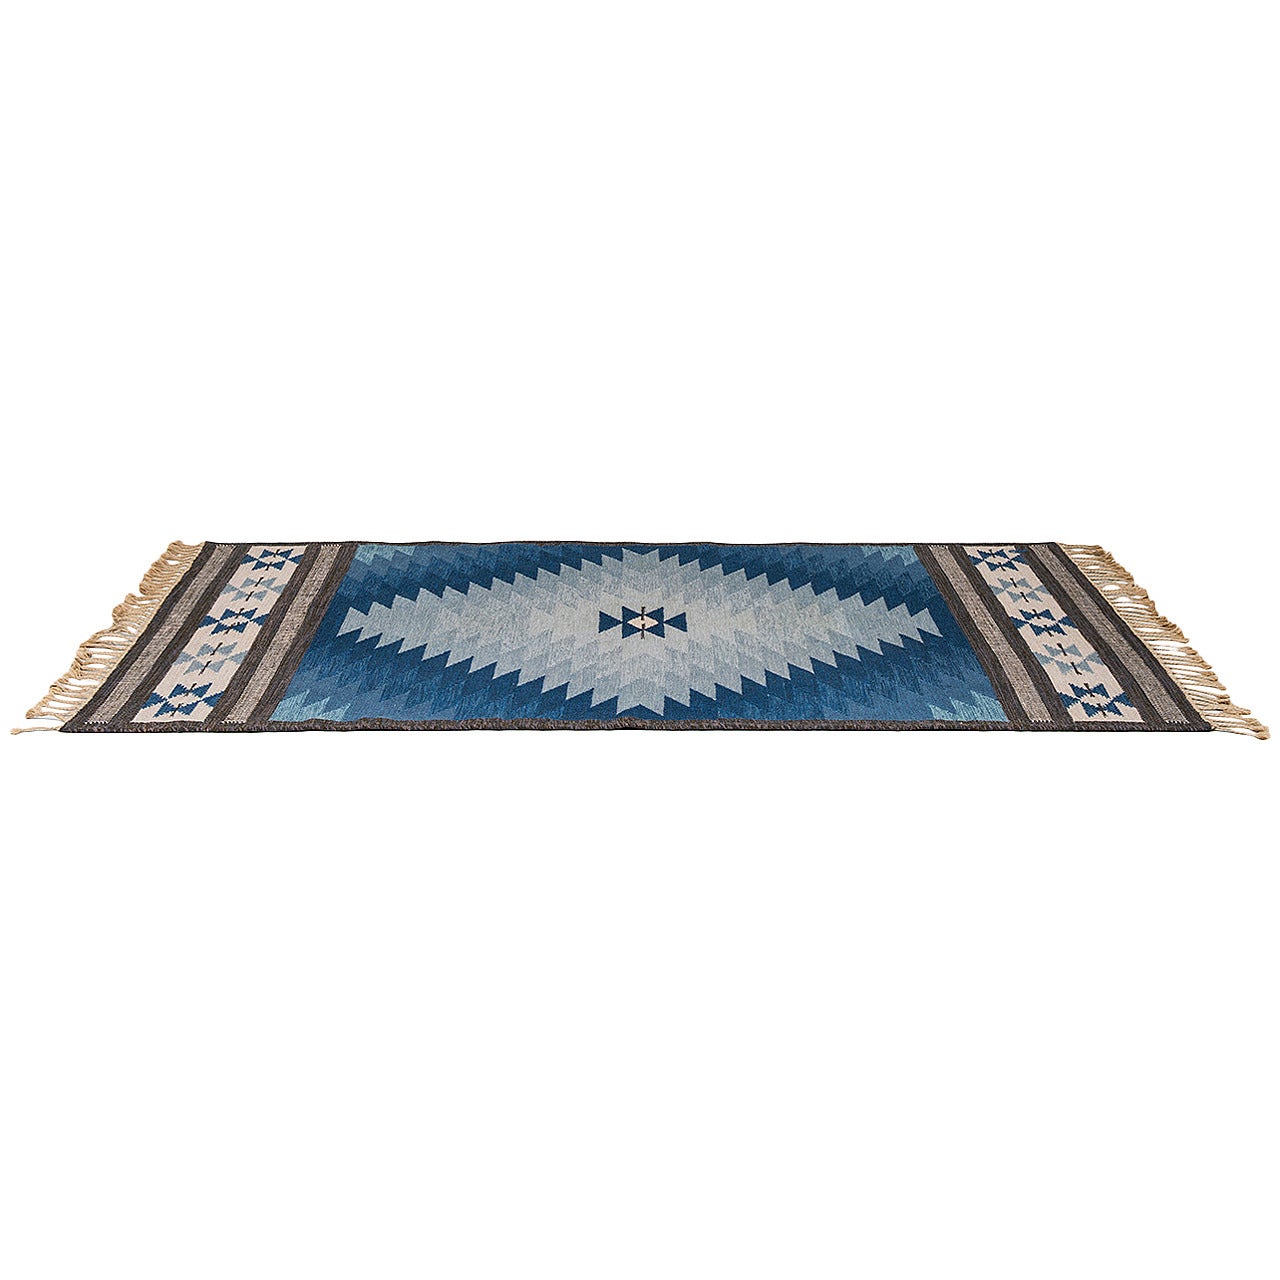 Rare Röllakan Carpet by Unknown Designer